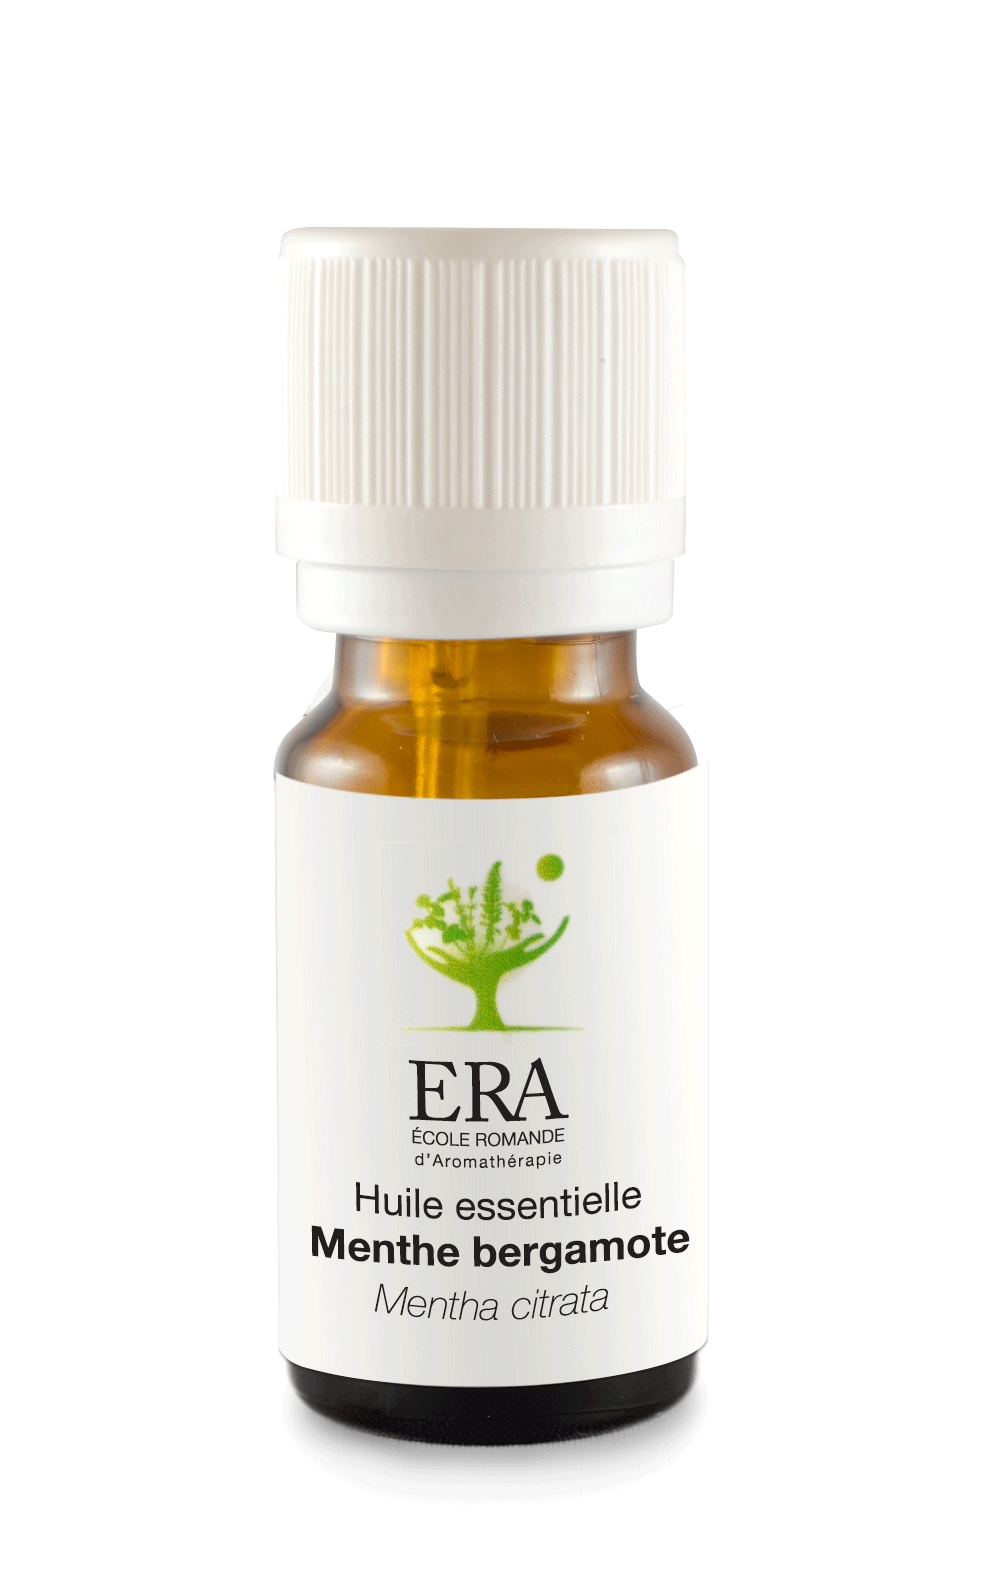 Menthe bergamote - Mentha citrata - Lamiacées